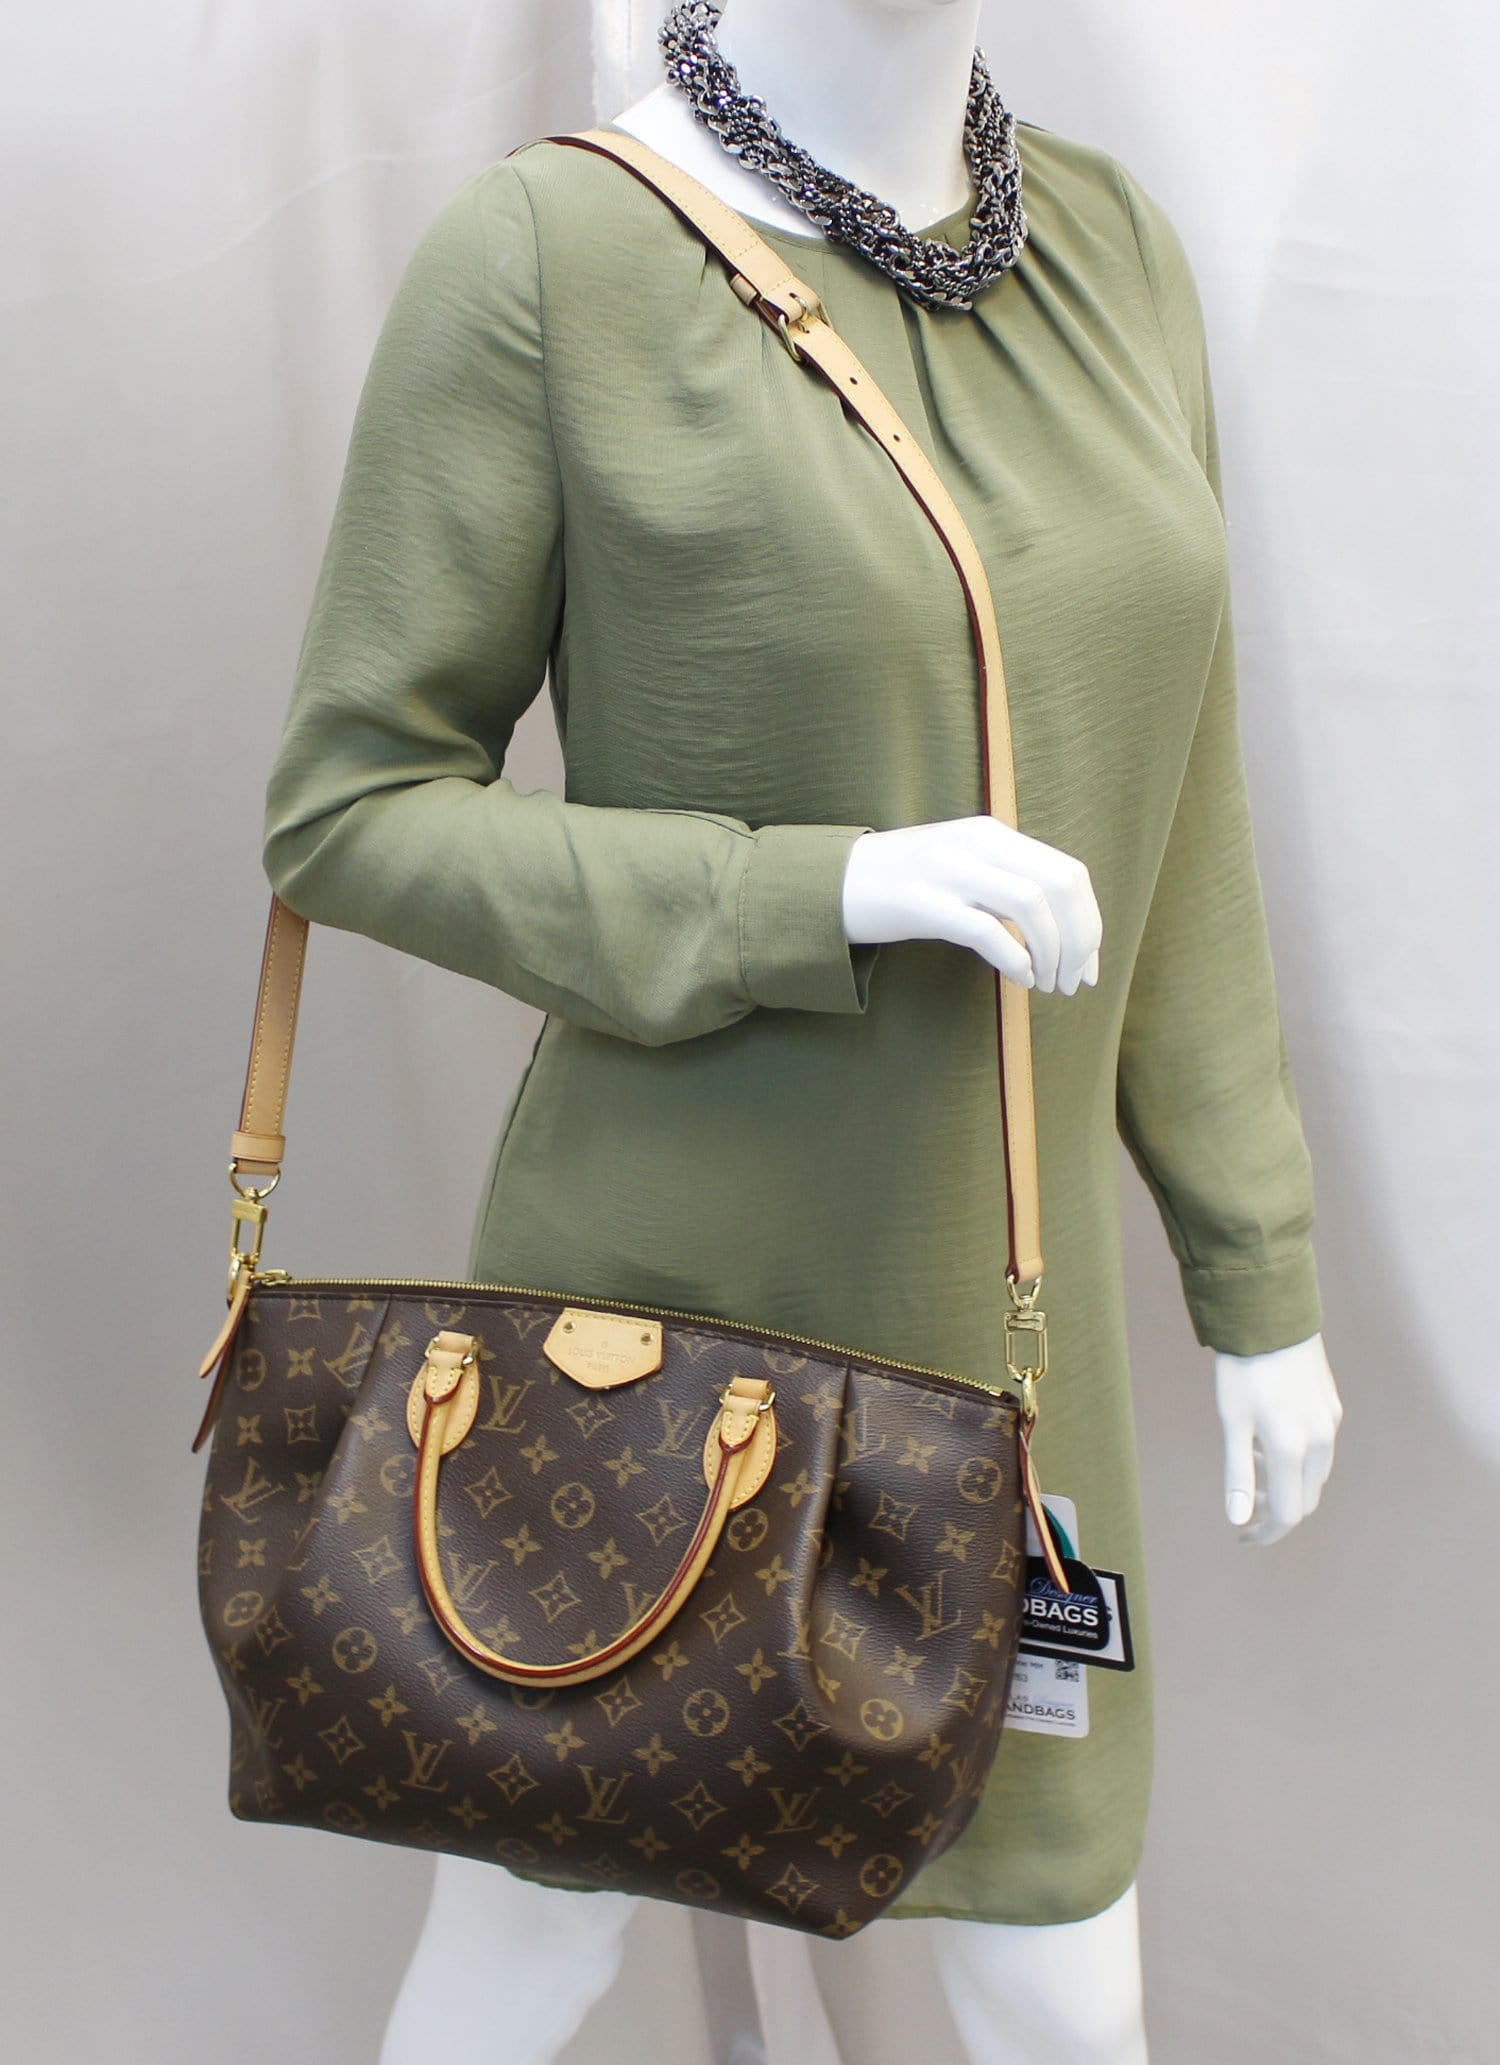 Turenne medium size handbag by Louis Vuitton <3 #carolinaherrera  #victoriasecrets #michaelkors #loi…